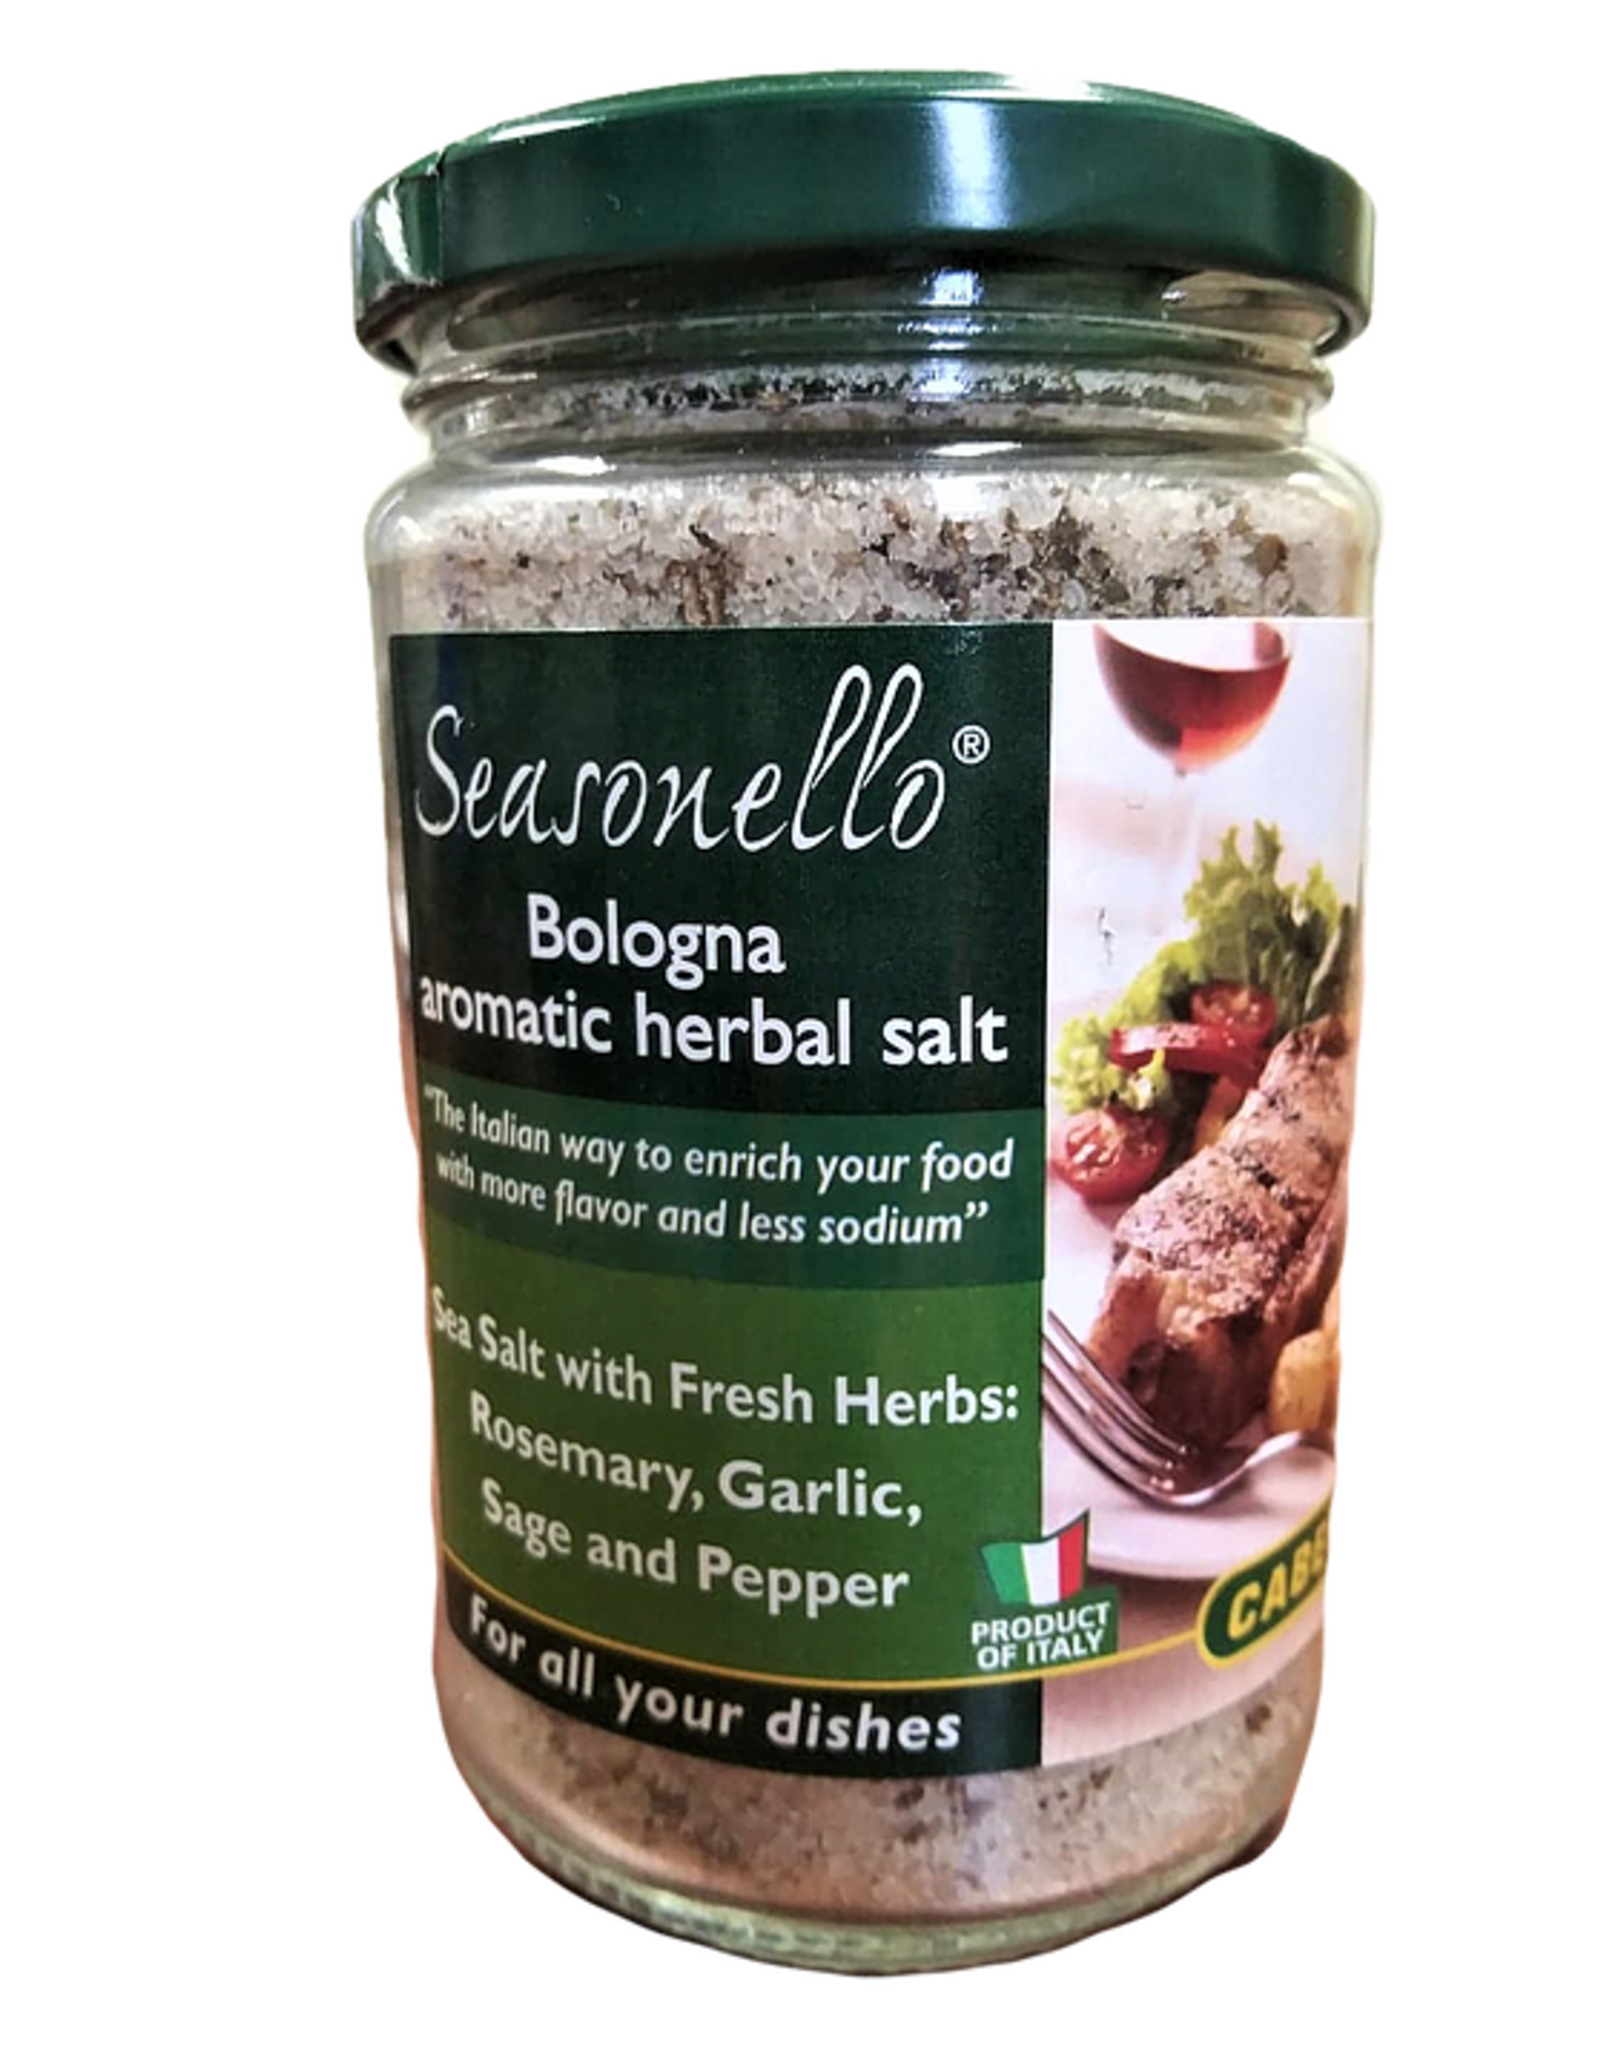 Seasonello - Aromatic Herbal Salt